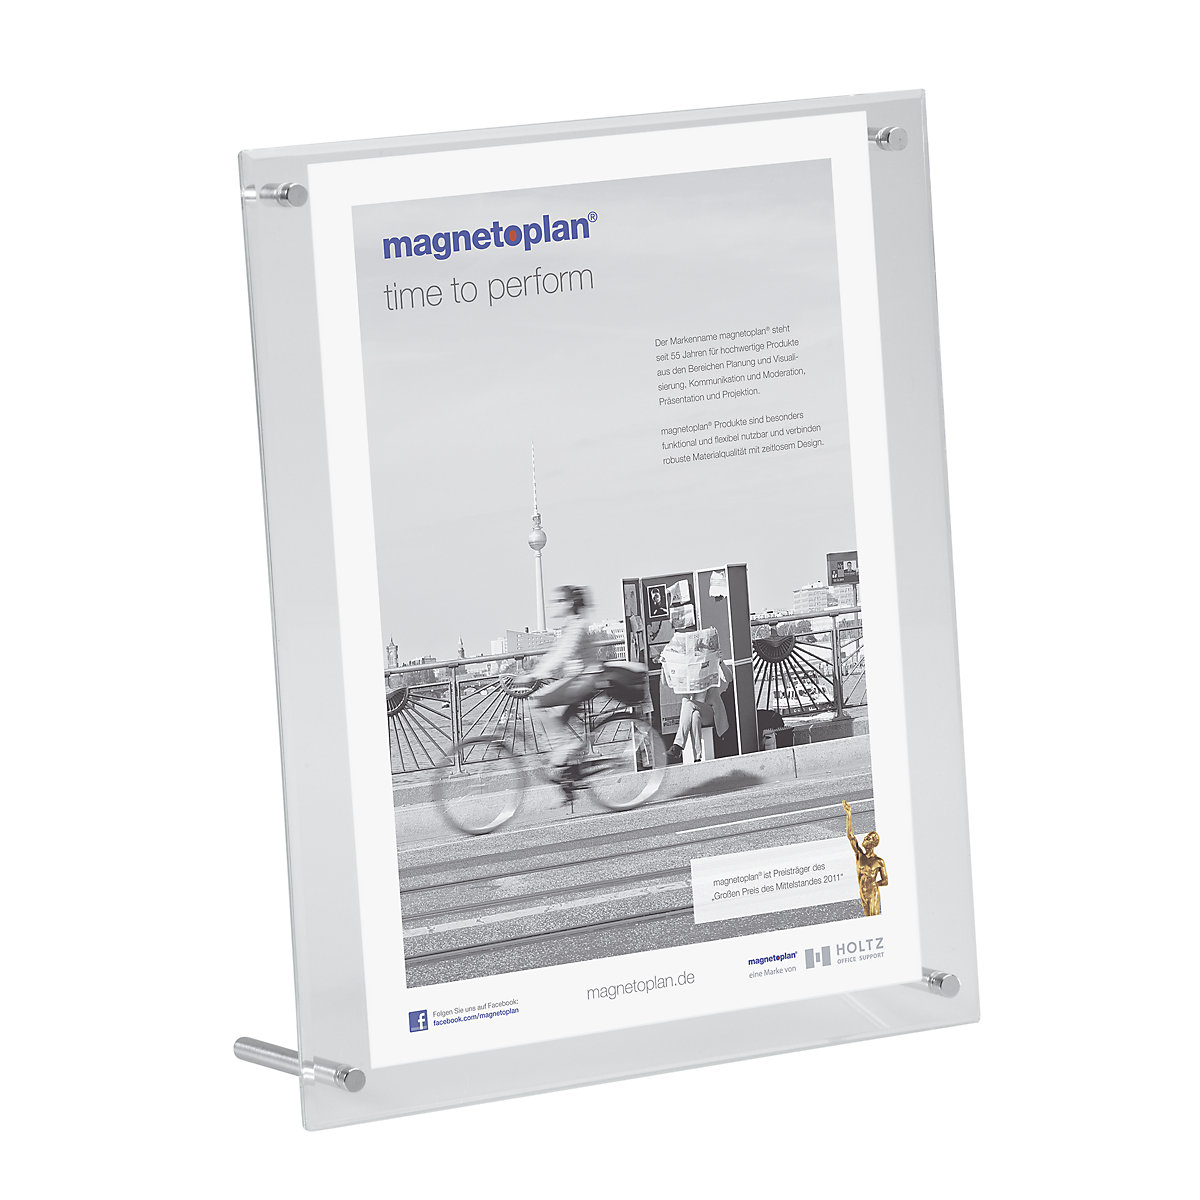 Namizno stojalo SUPERIOR IMAGE – magnetoplan (Slika izdelka 2)-1